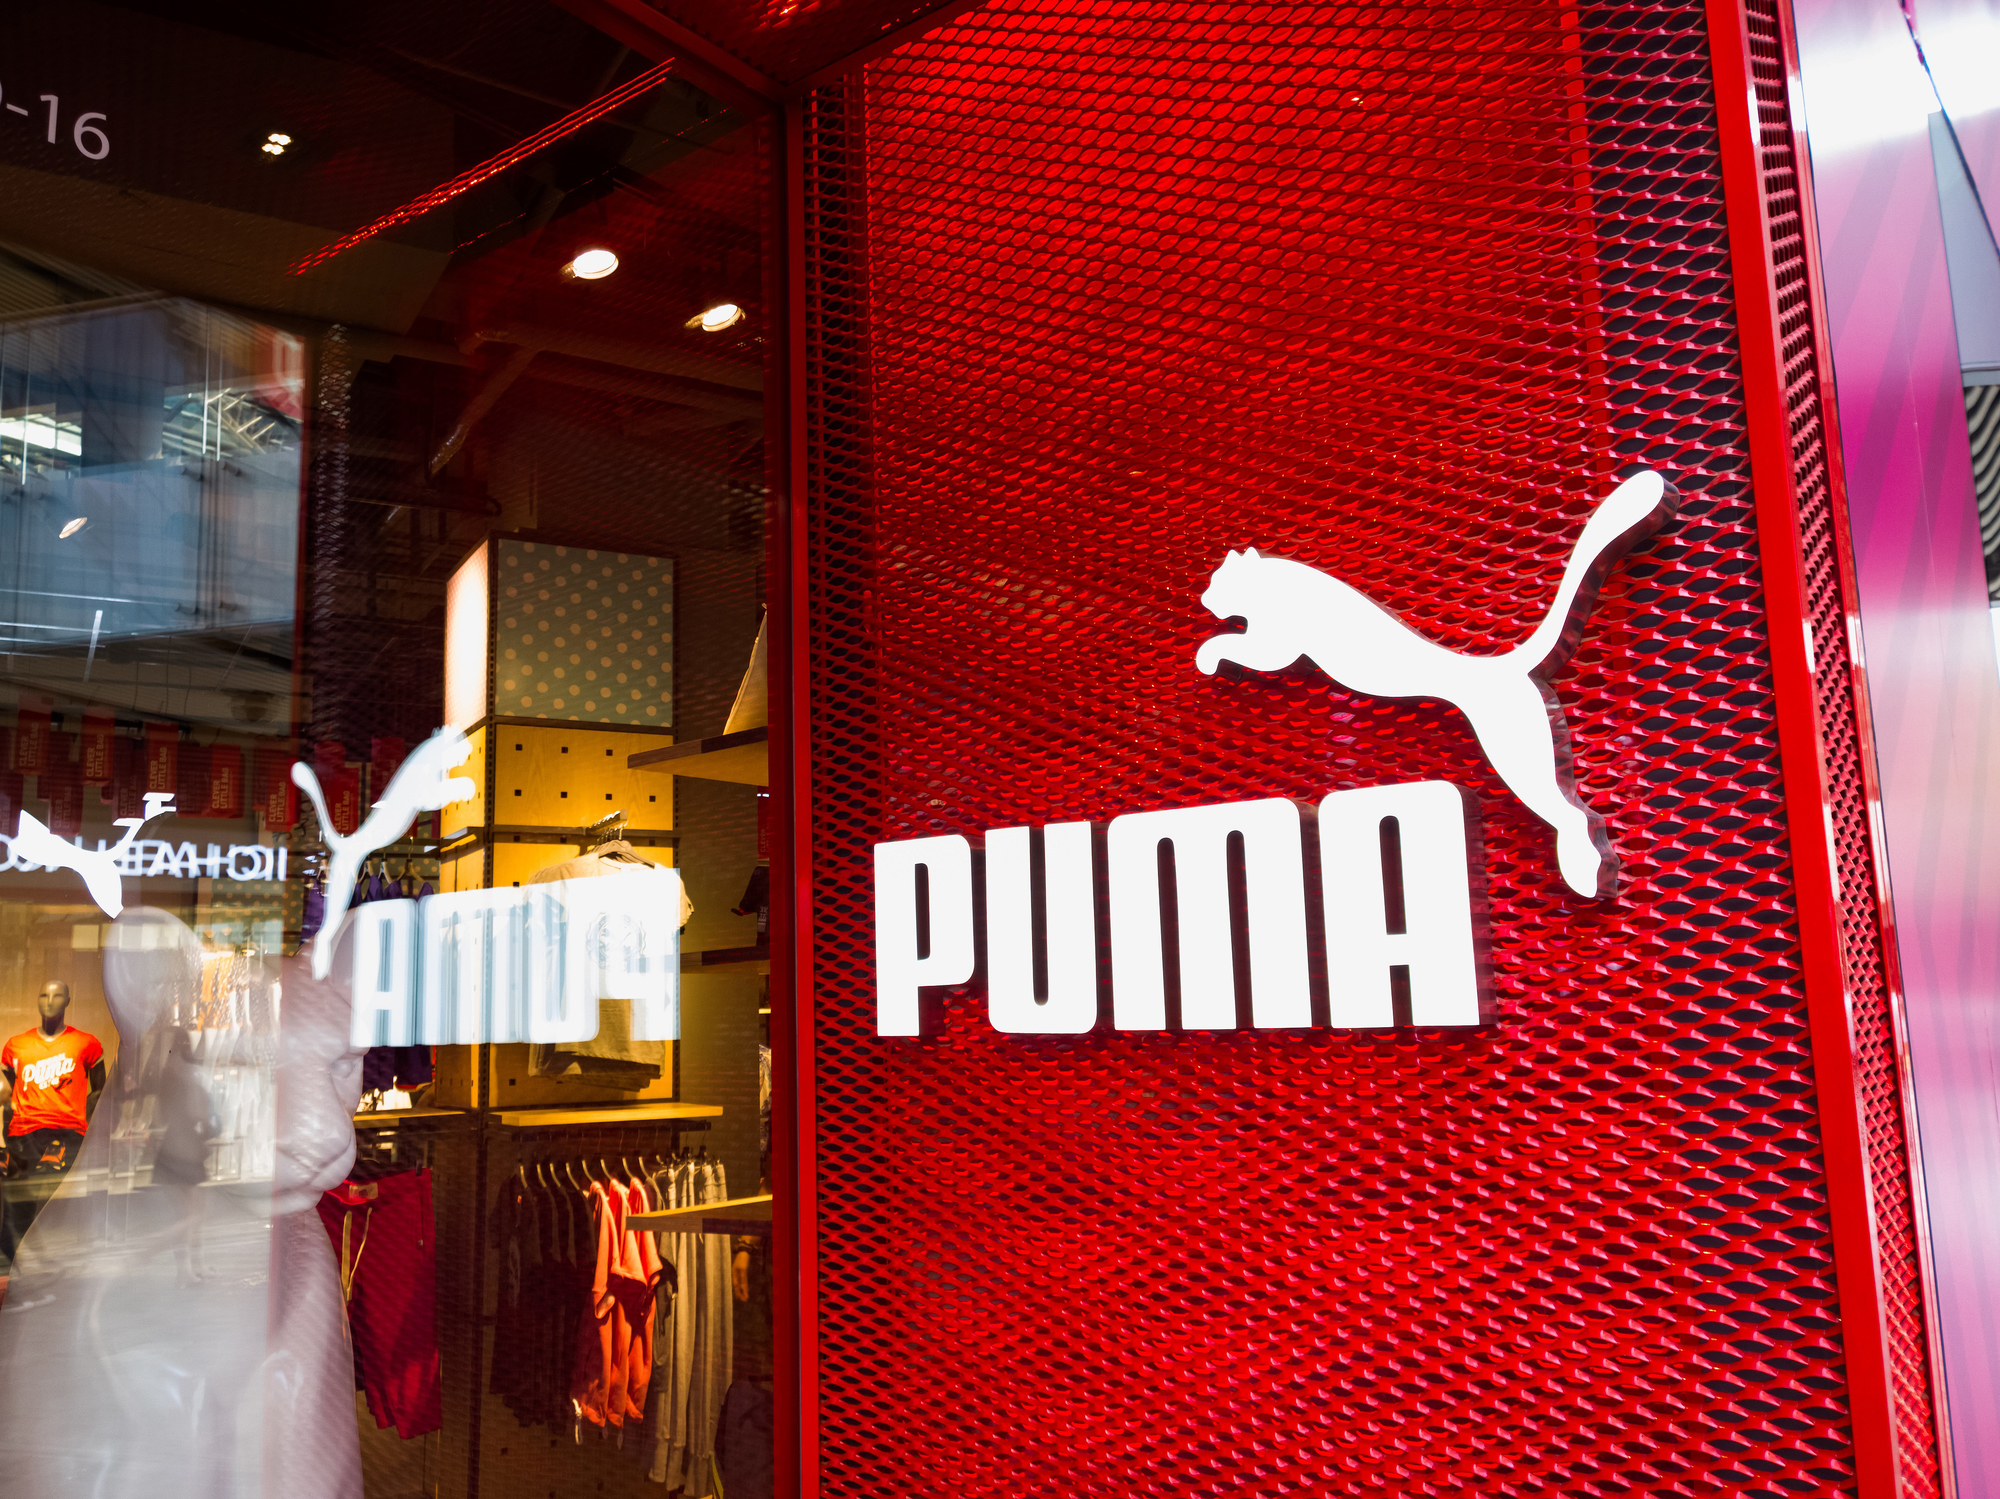 Puma promo code: Take 20% off in the app